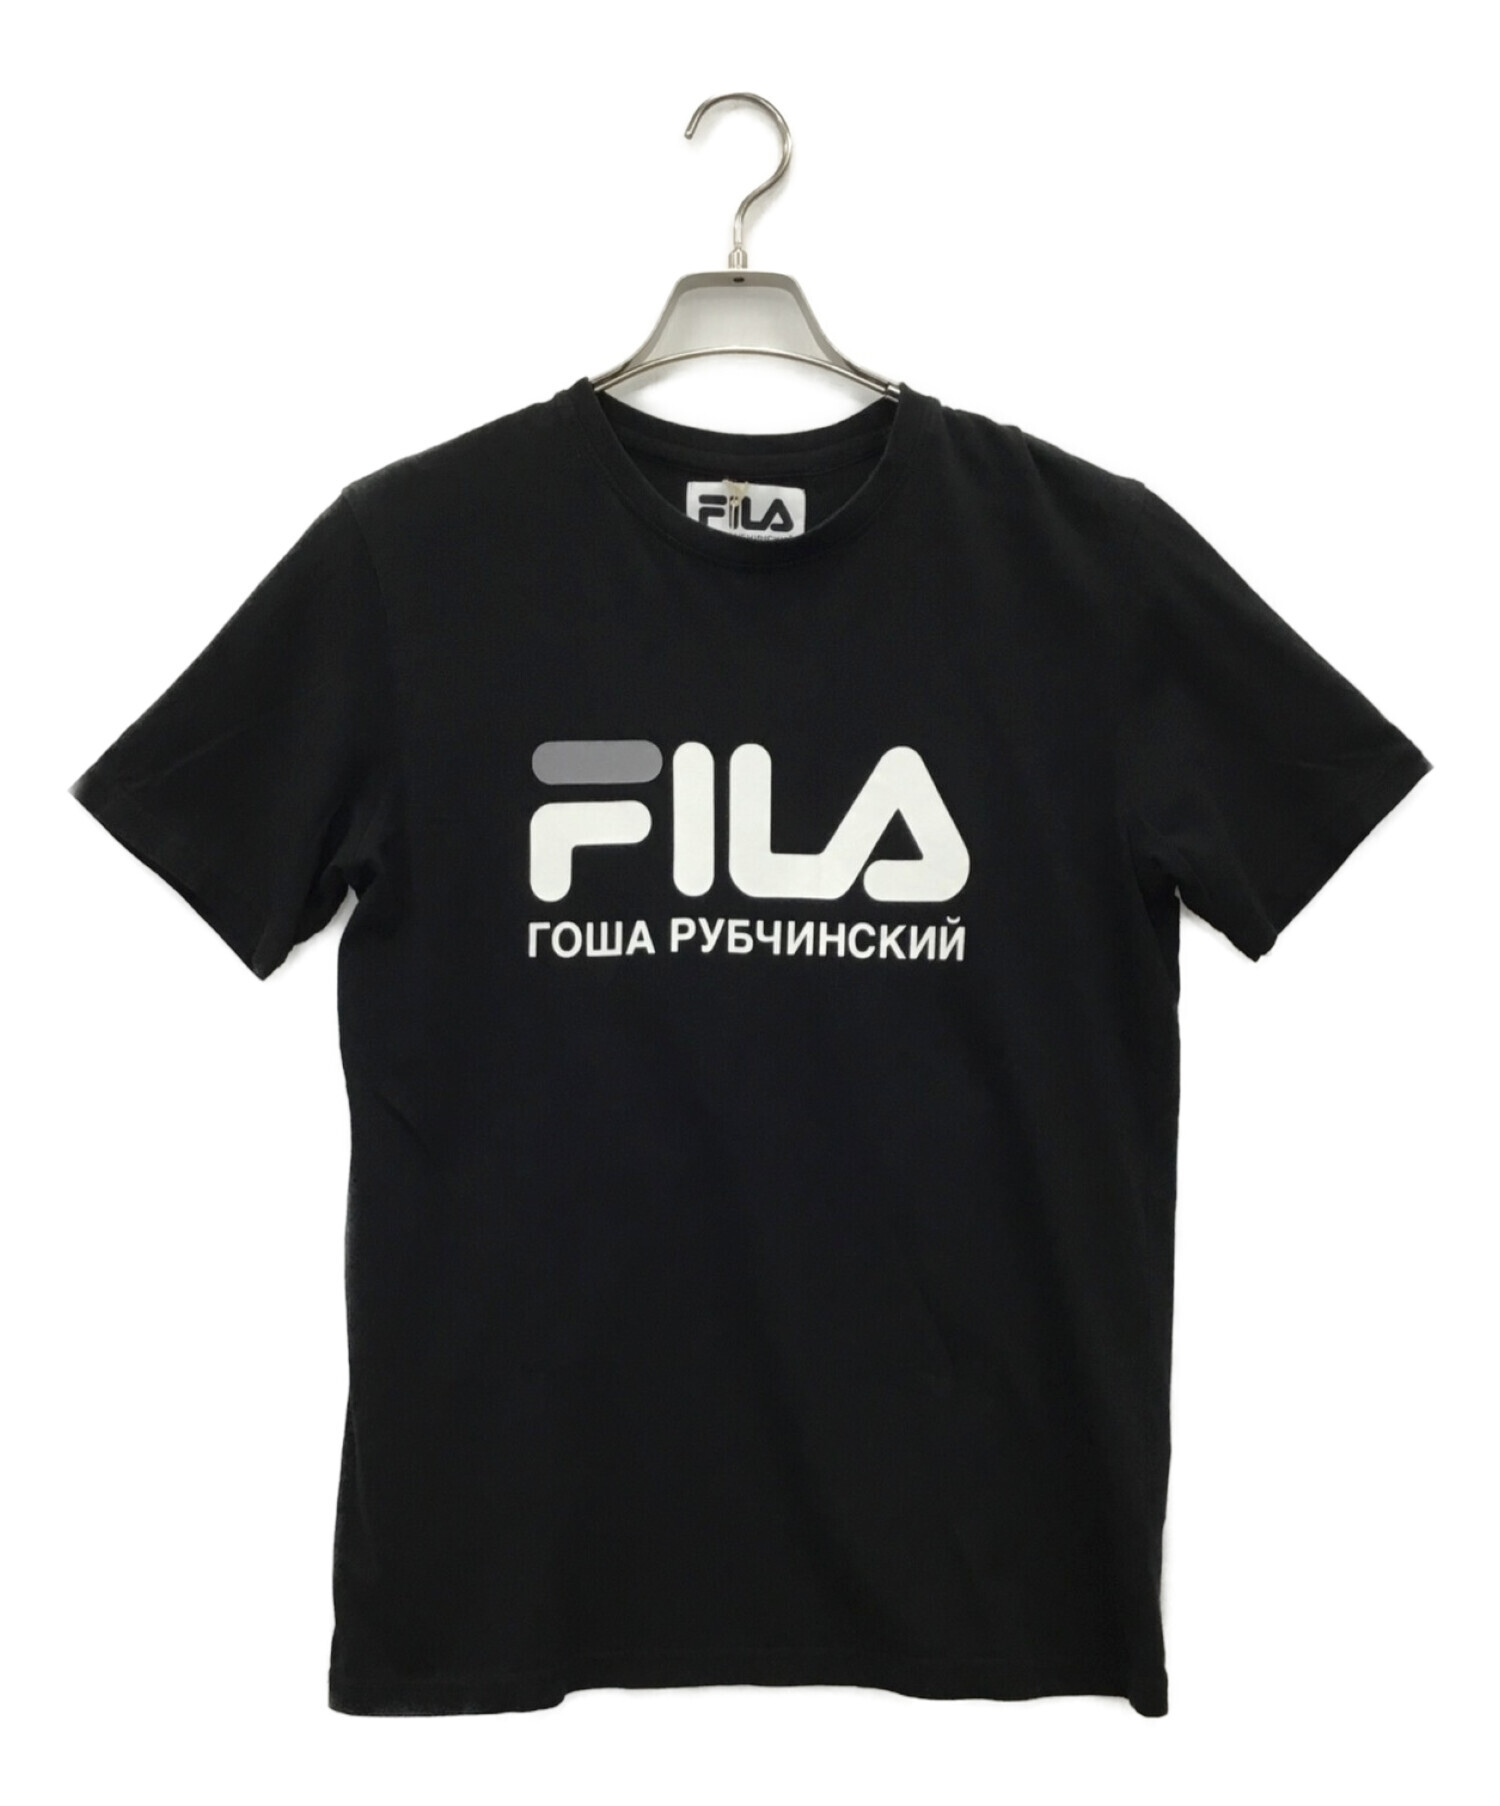 FILA×Gosha Rubchinskiy (フィラ×ゴーシャラブチンスキー) Tシャツ ブラック サイズ:S 未使用品